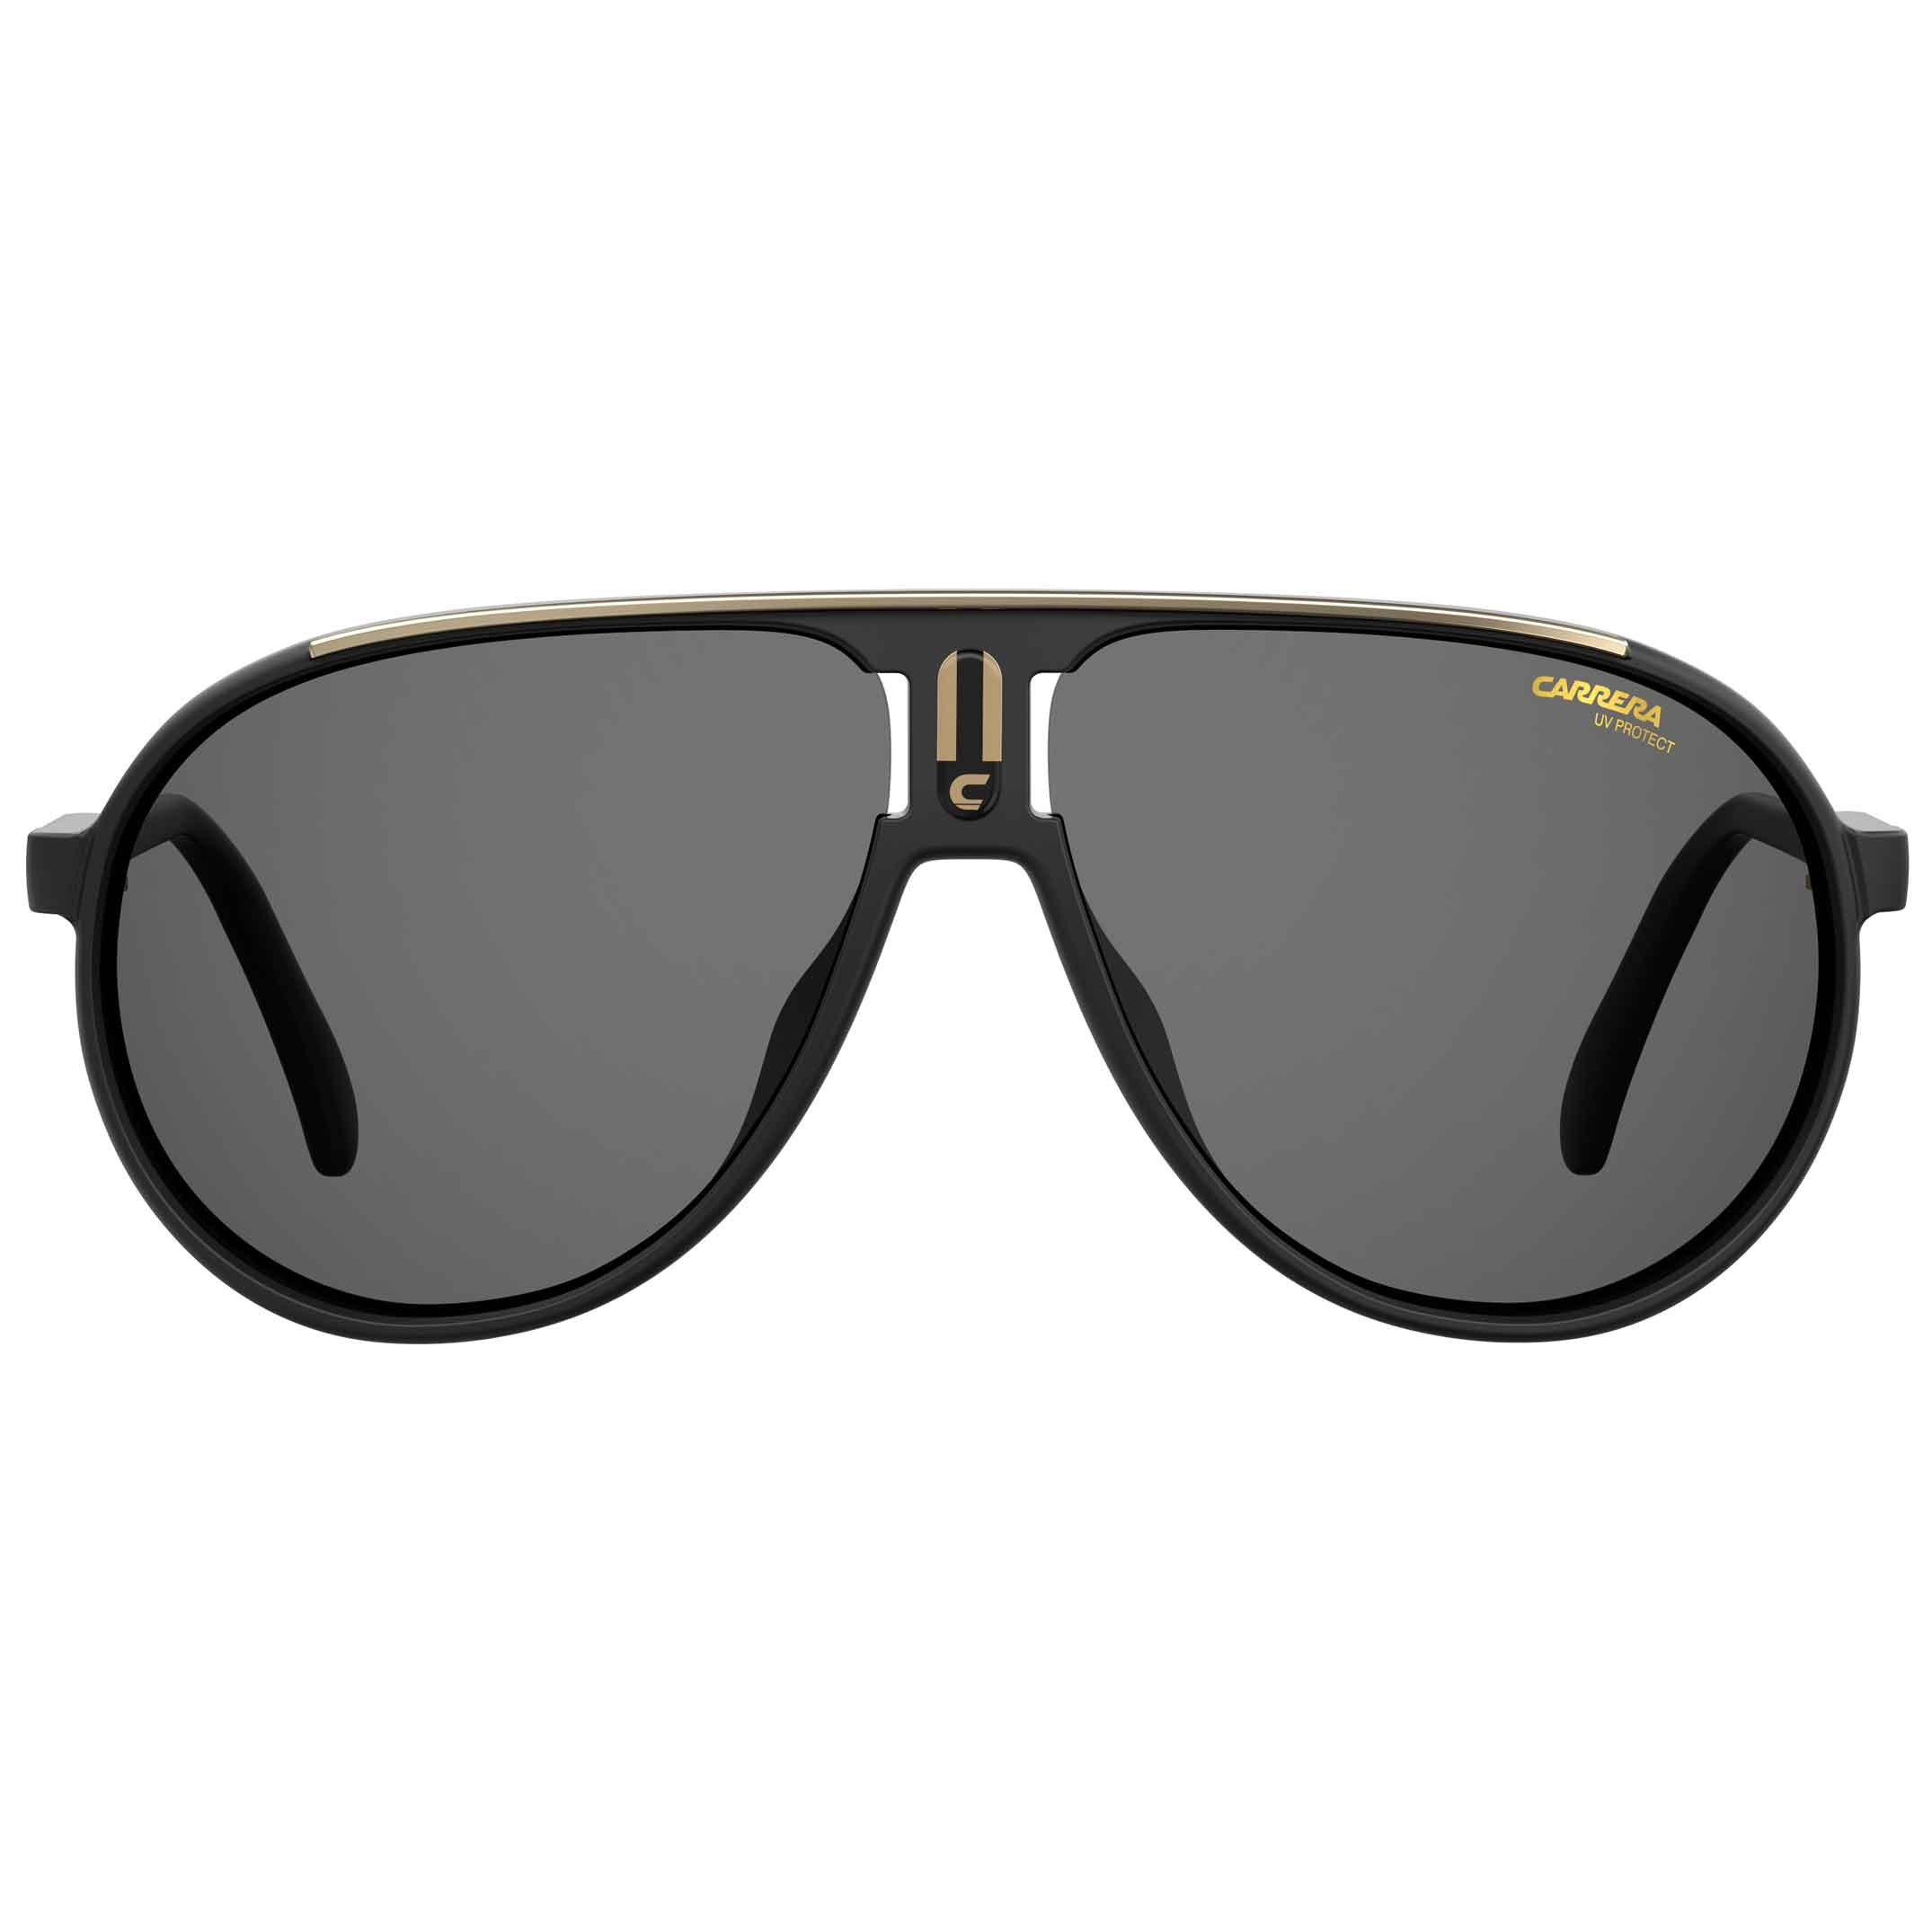 Carrera Gafas de sol unisex estilo Champion/N Pilot, negro mate/gris, 2.441  in, 0.472 in, negro, gris (Matte Black/Grey)